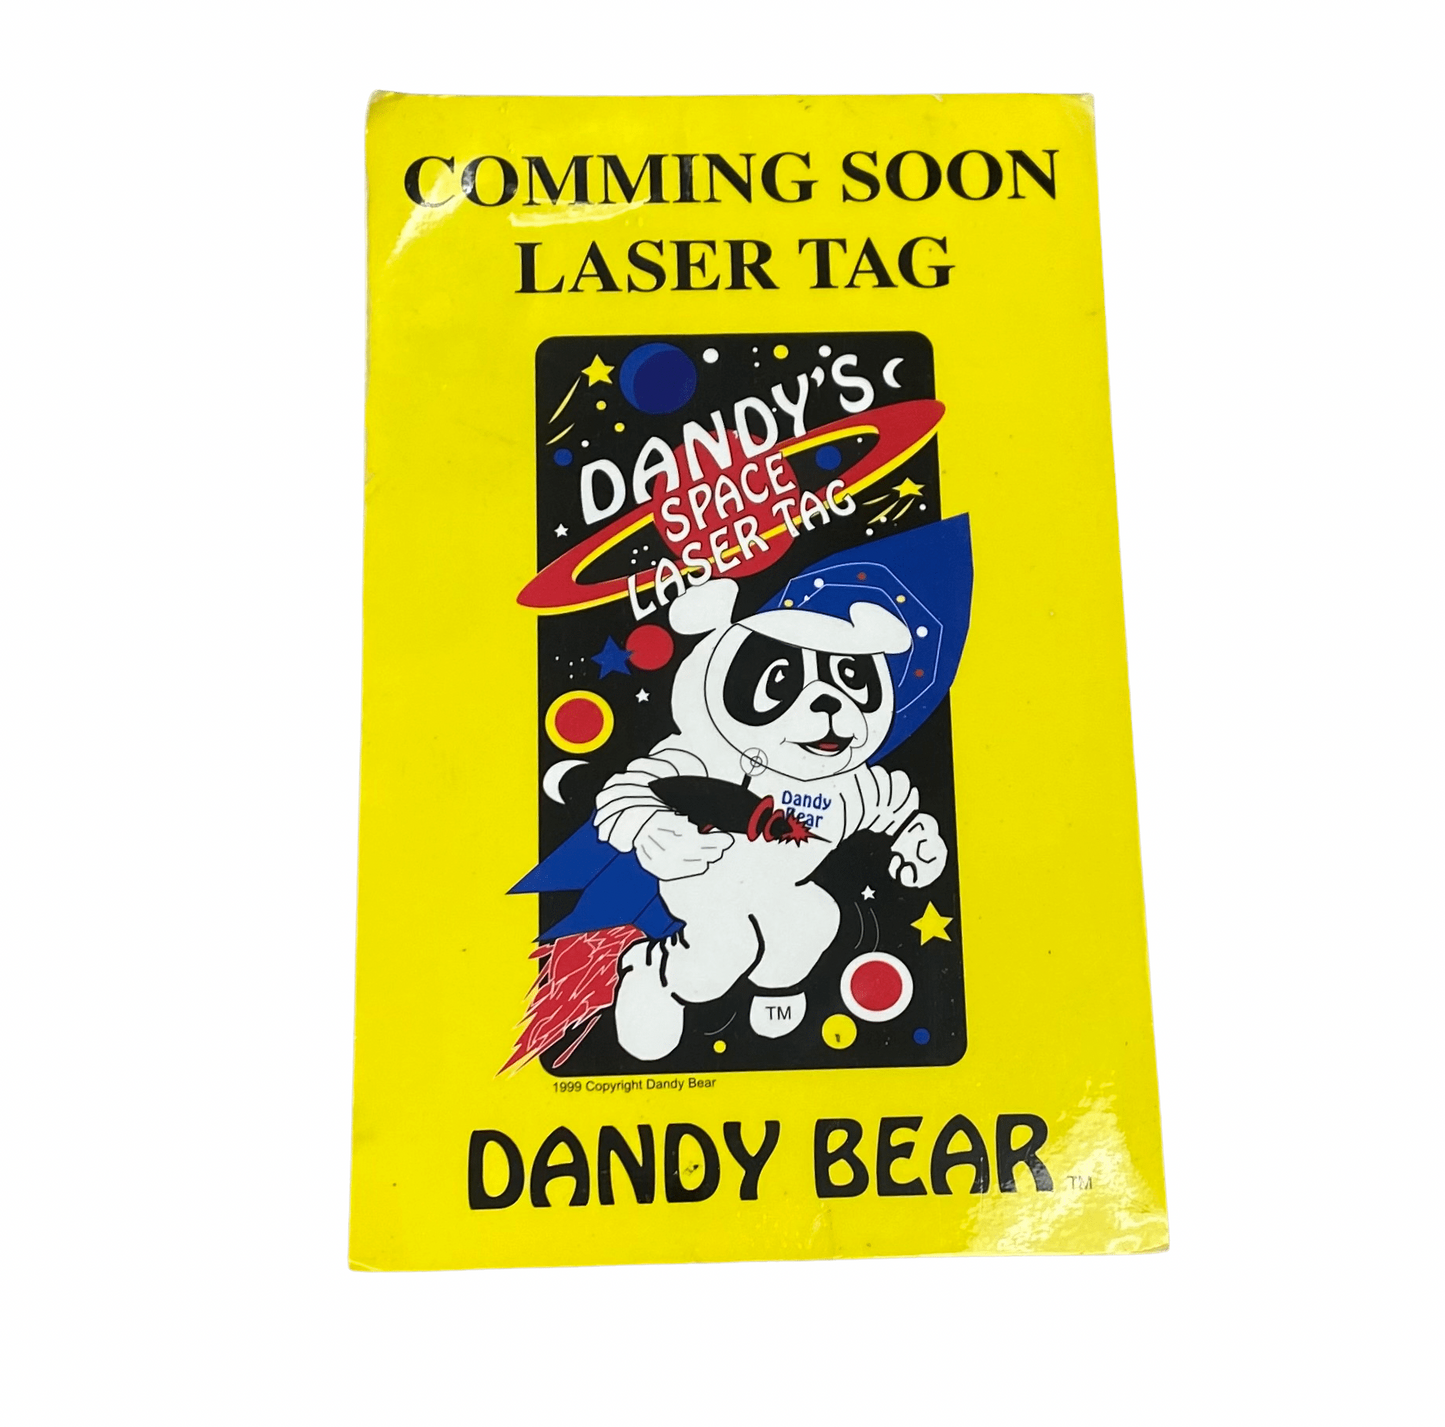 Dandy Bear Original Signs - Coming Soon Laser Tag